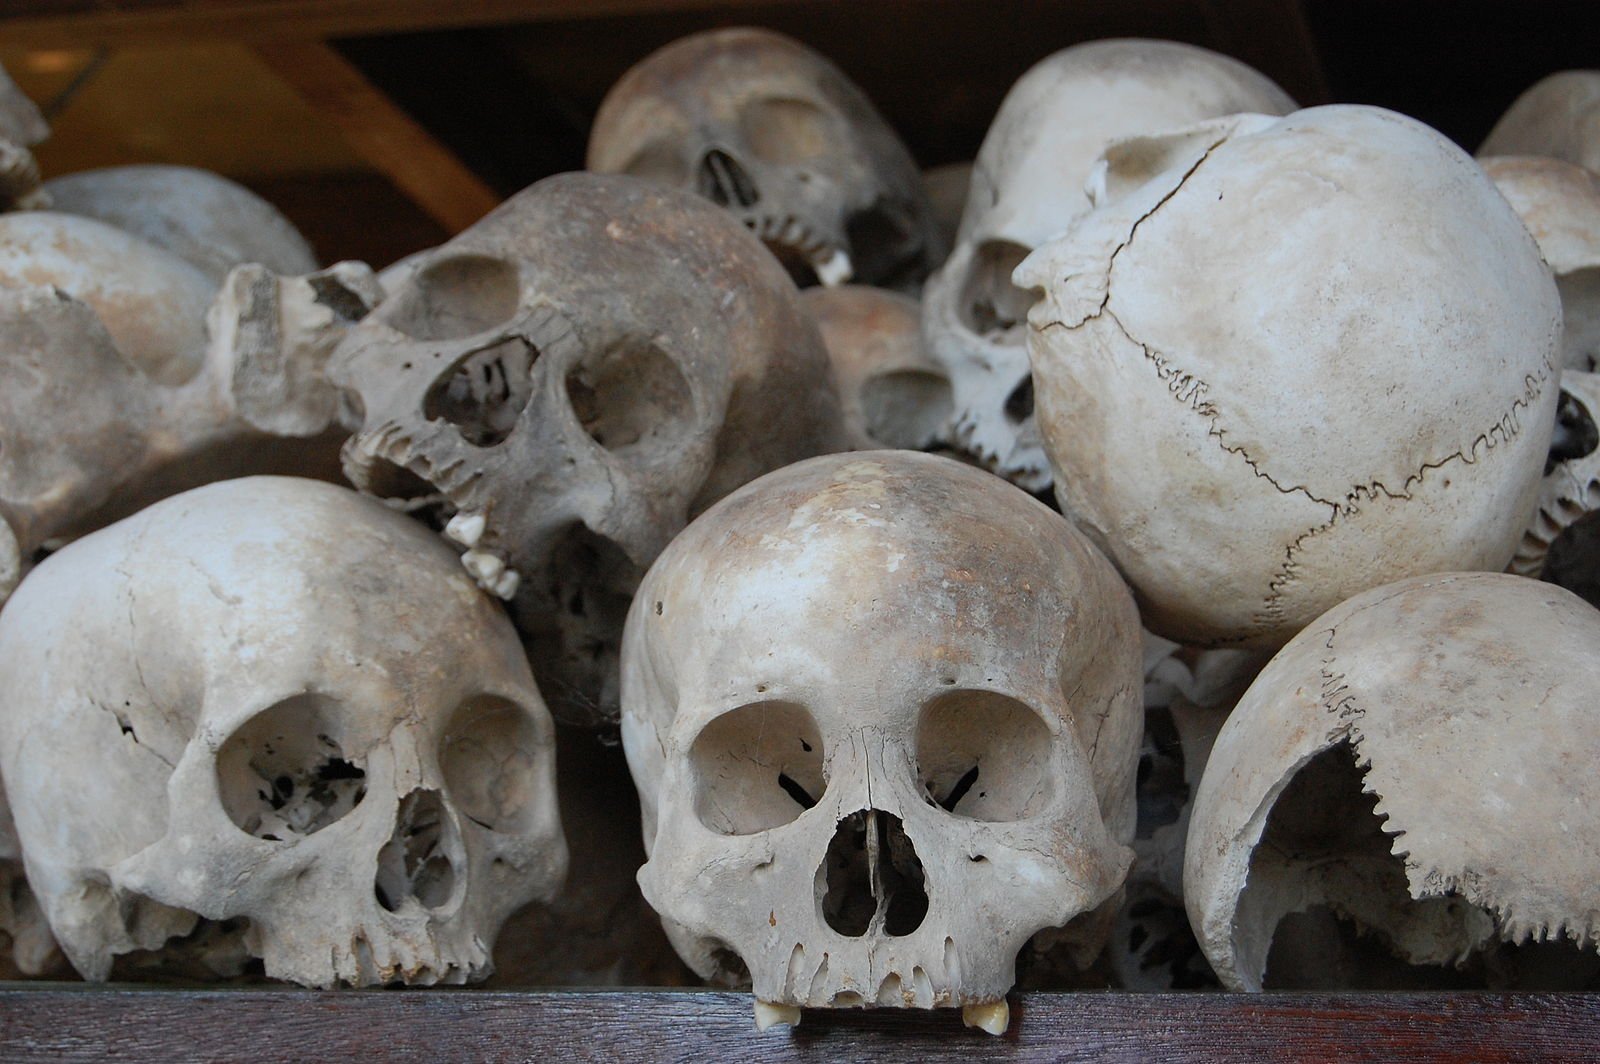 Human skulls on display in Cambodia’s killing fields.